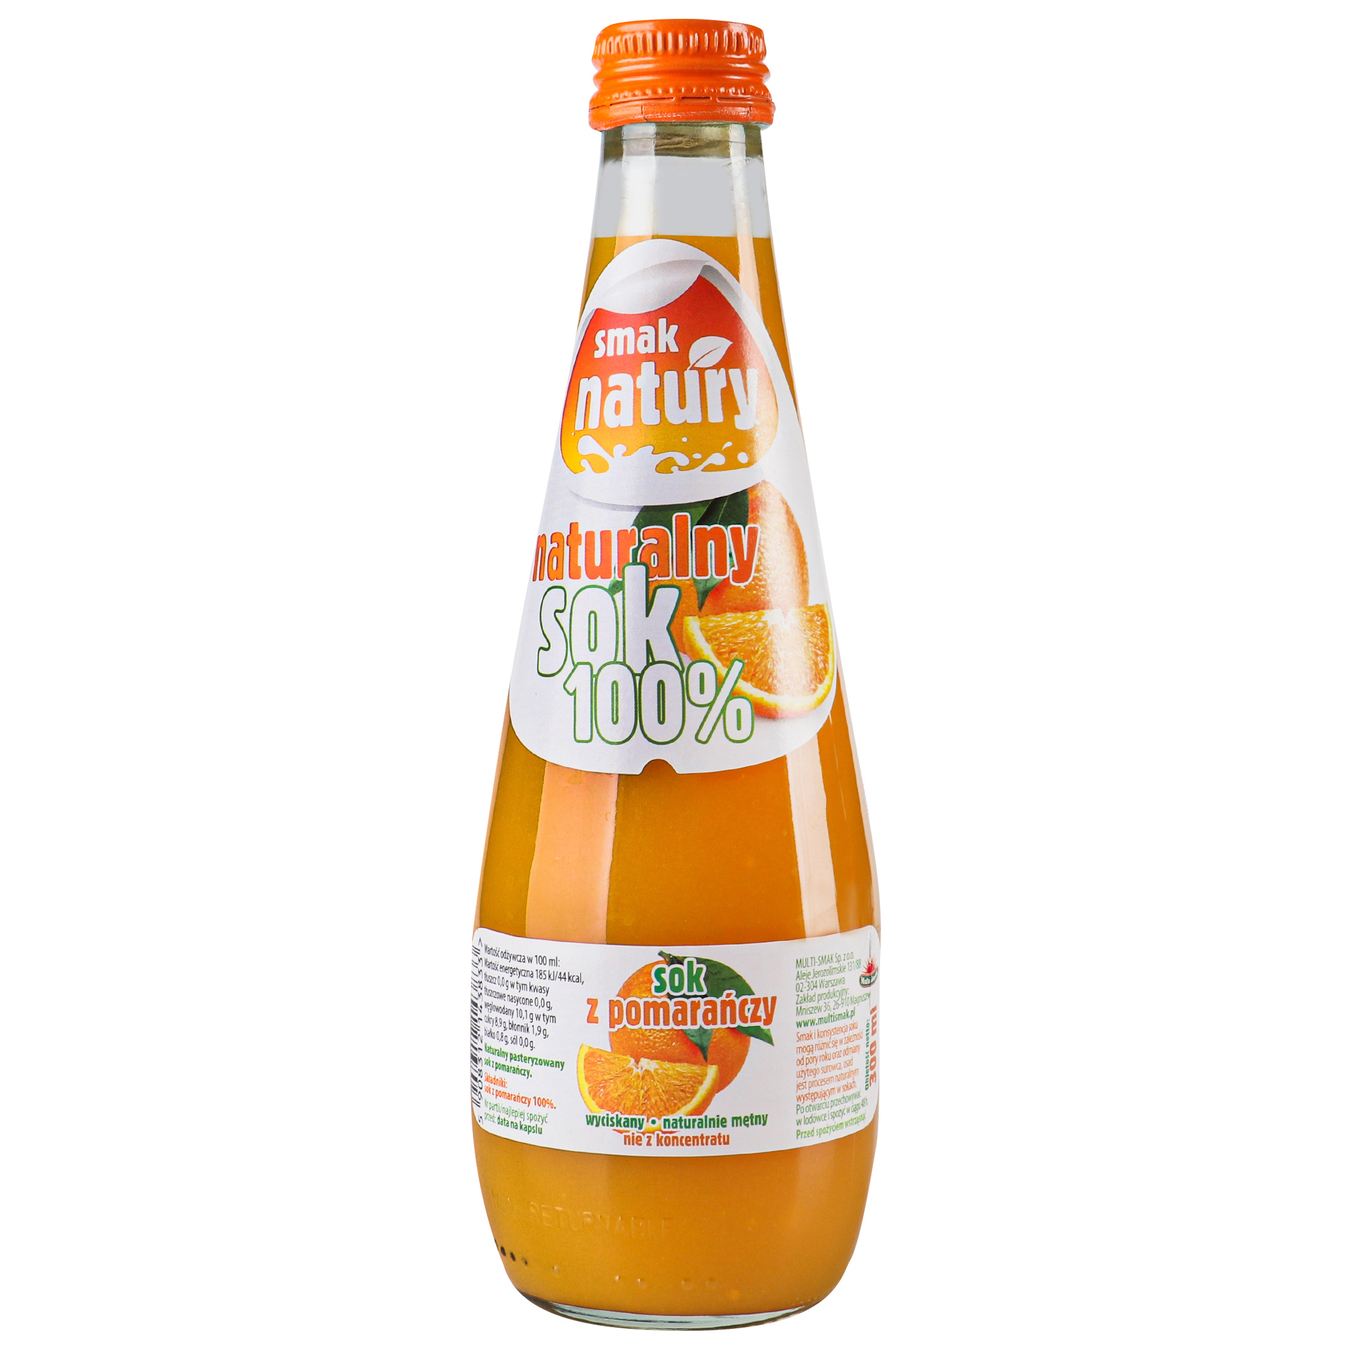 Smak Natury orange juice 0.3 l